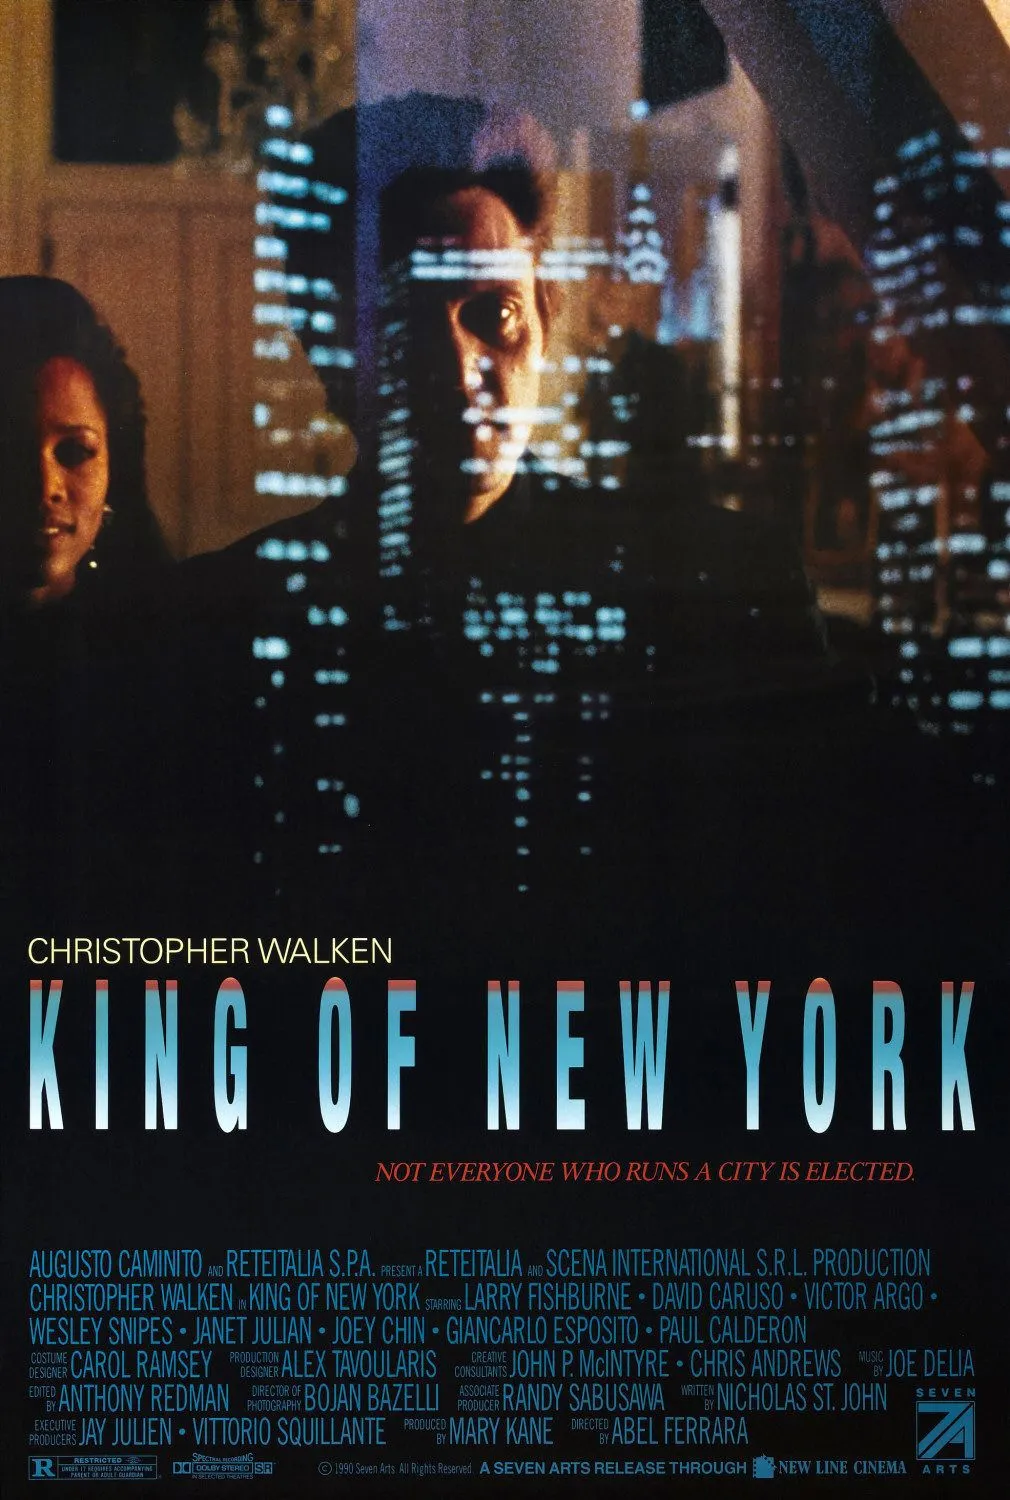 Hollywood Babylon: King of New York